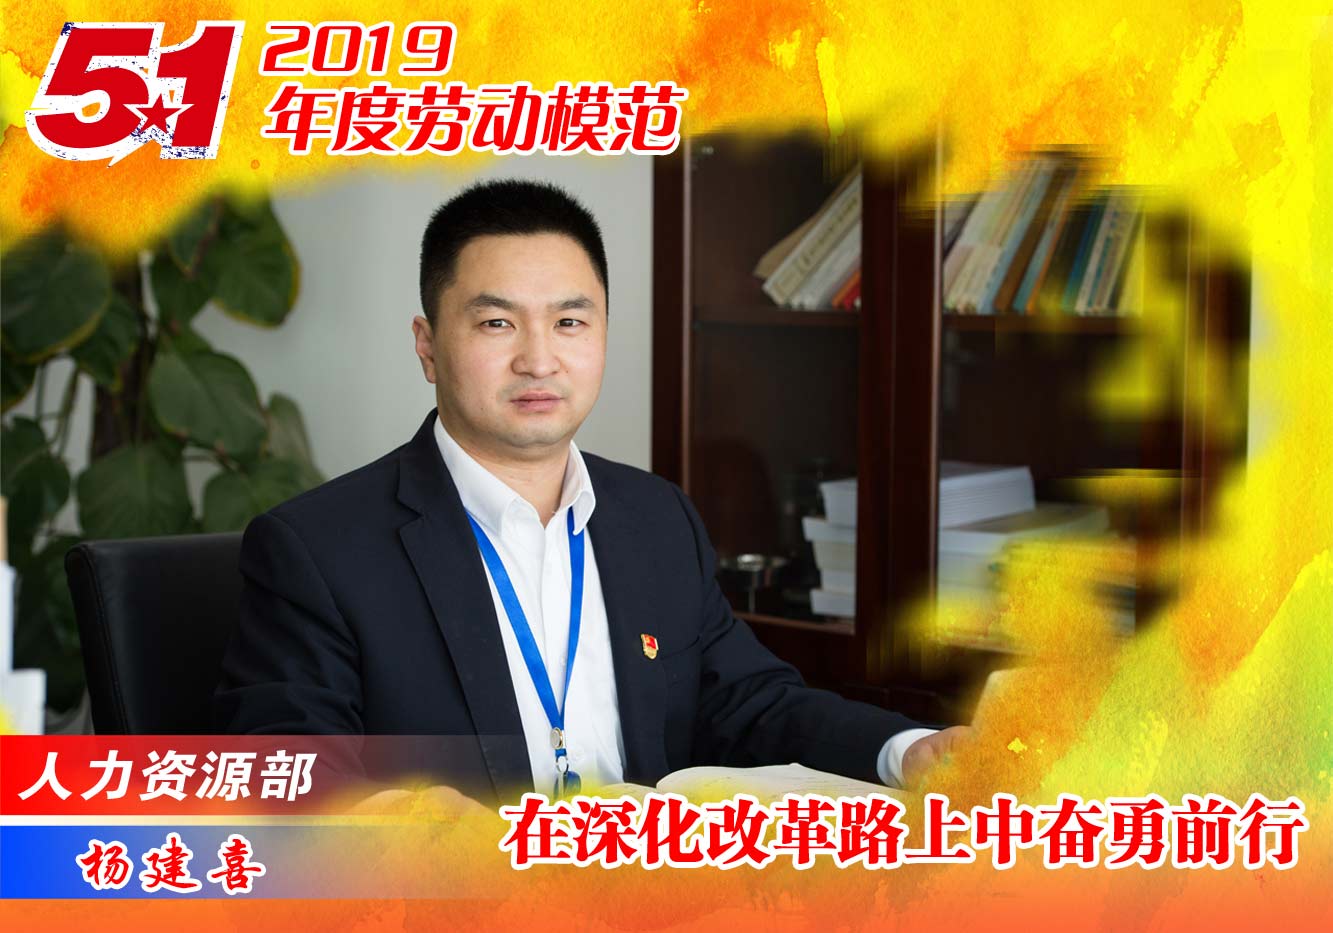 Model employee of 2019: Yang Jianxi, HR Department